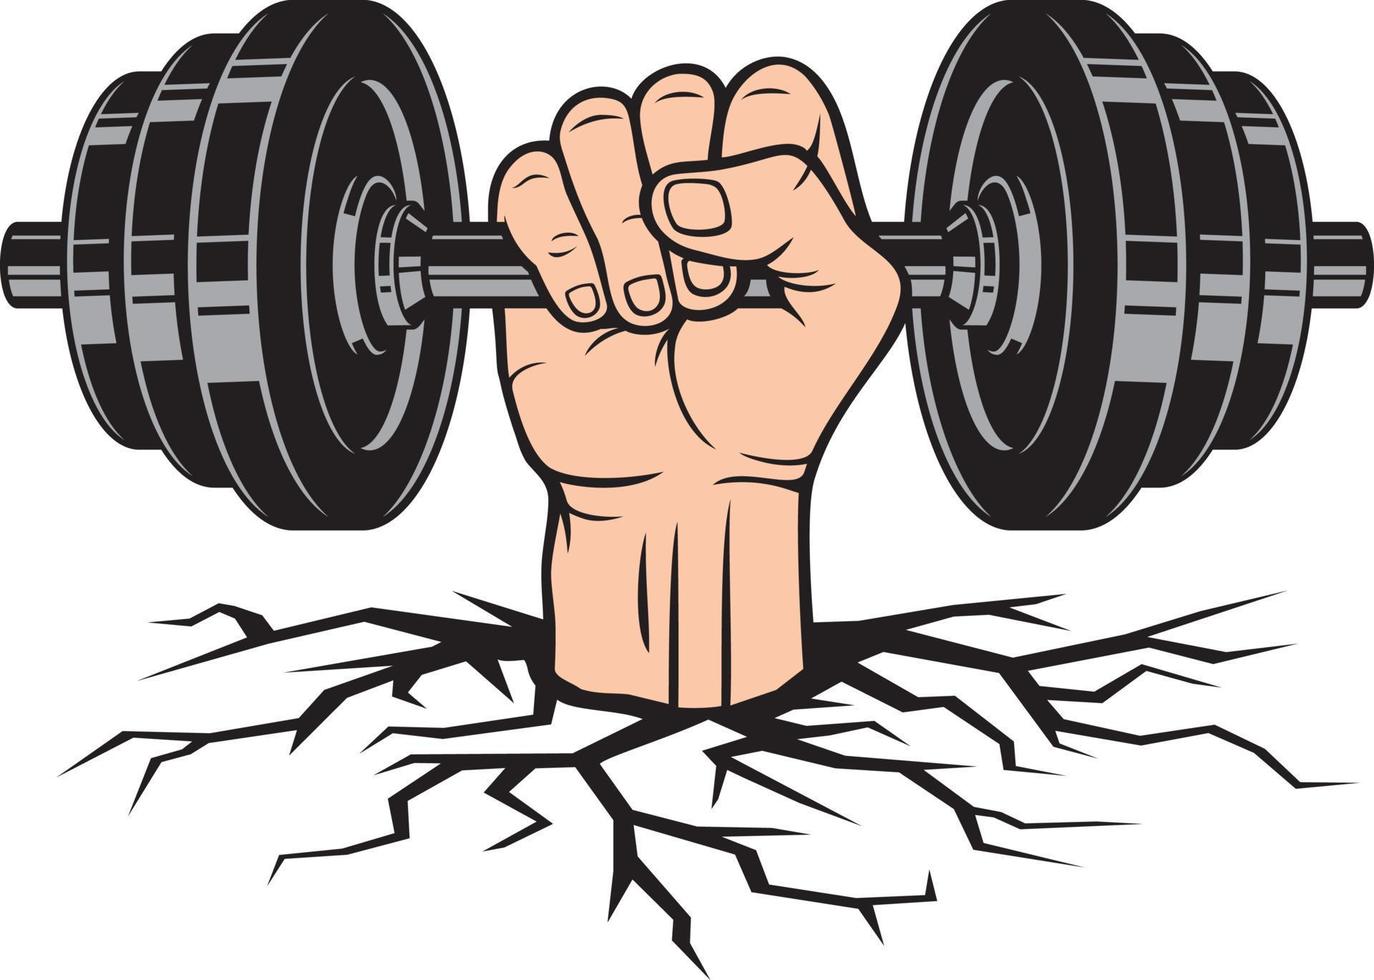 Hand Holding Dumbbell - Barbell. Gym, Bodybuilding or Sport Design. Motivation icon. Vector Illustration.